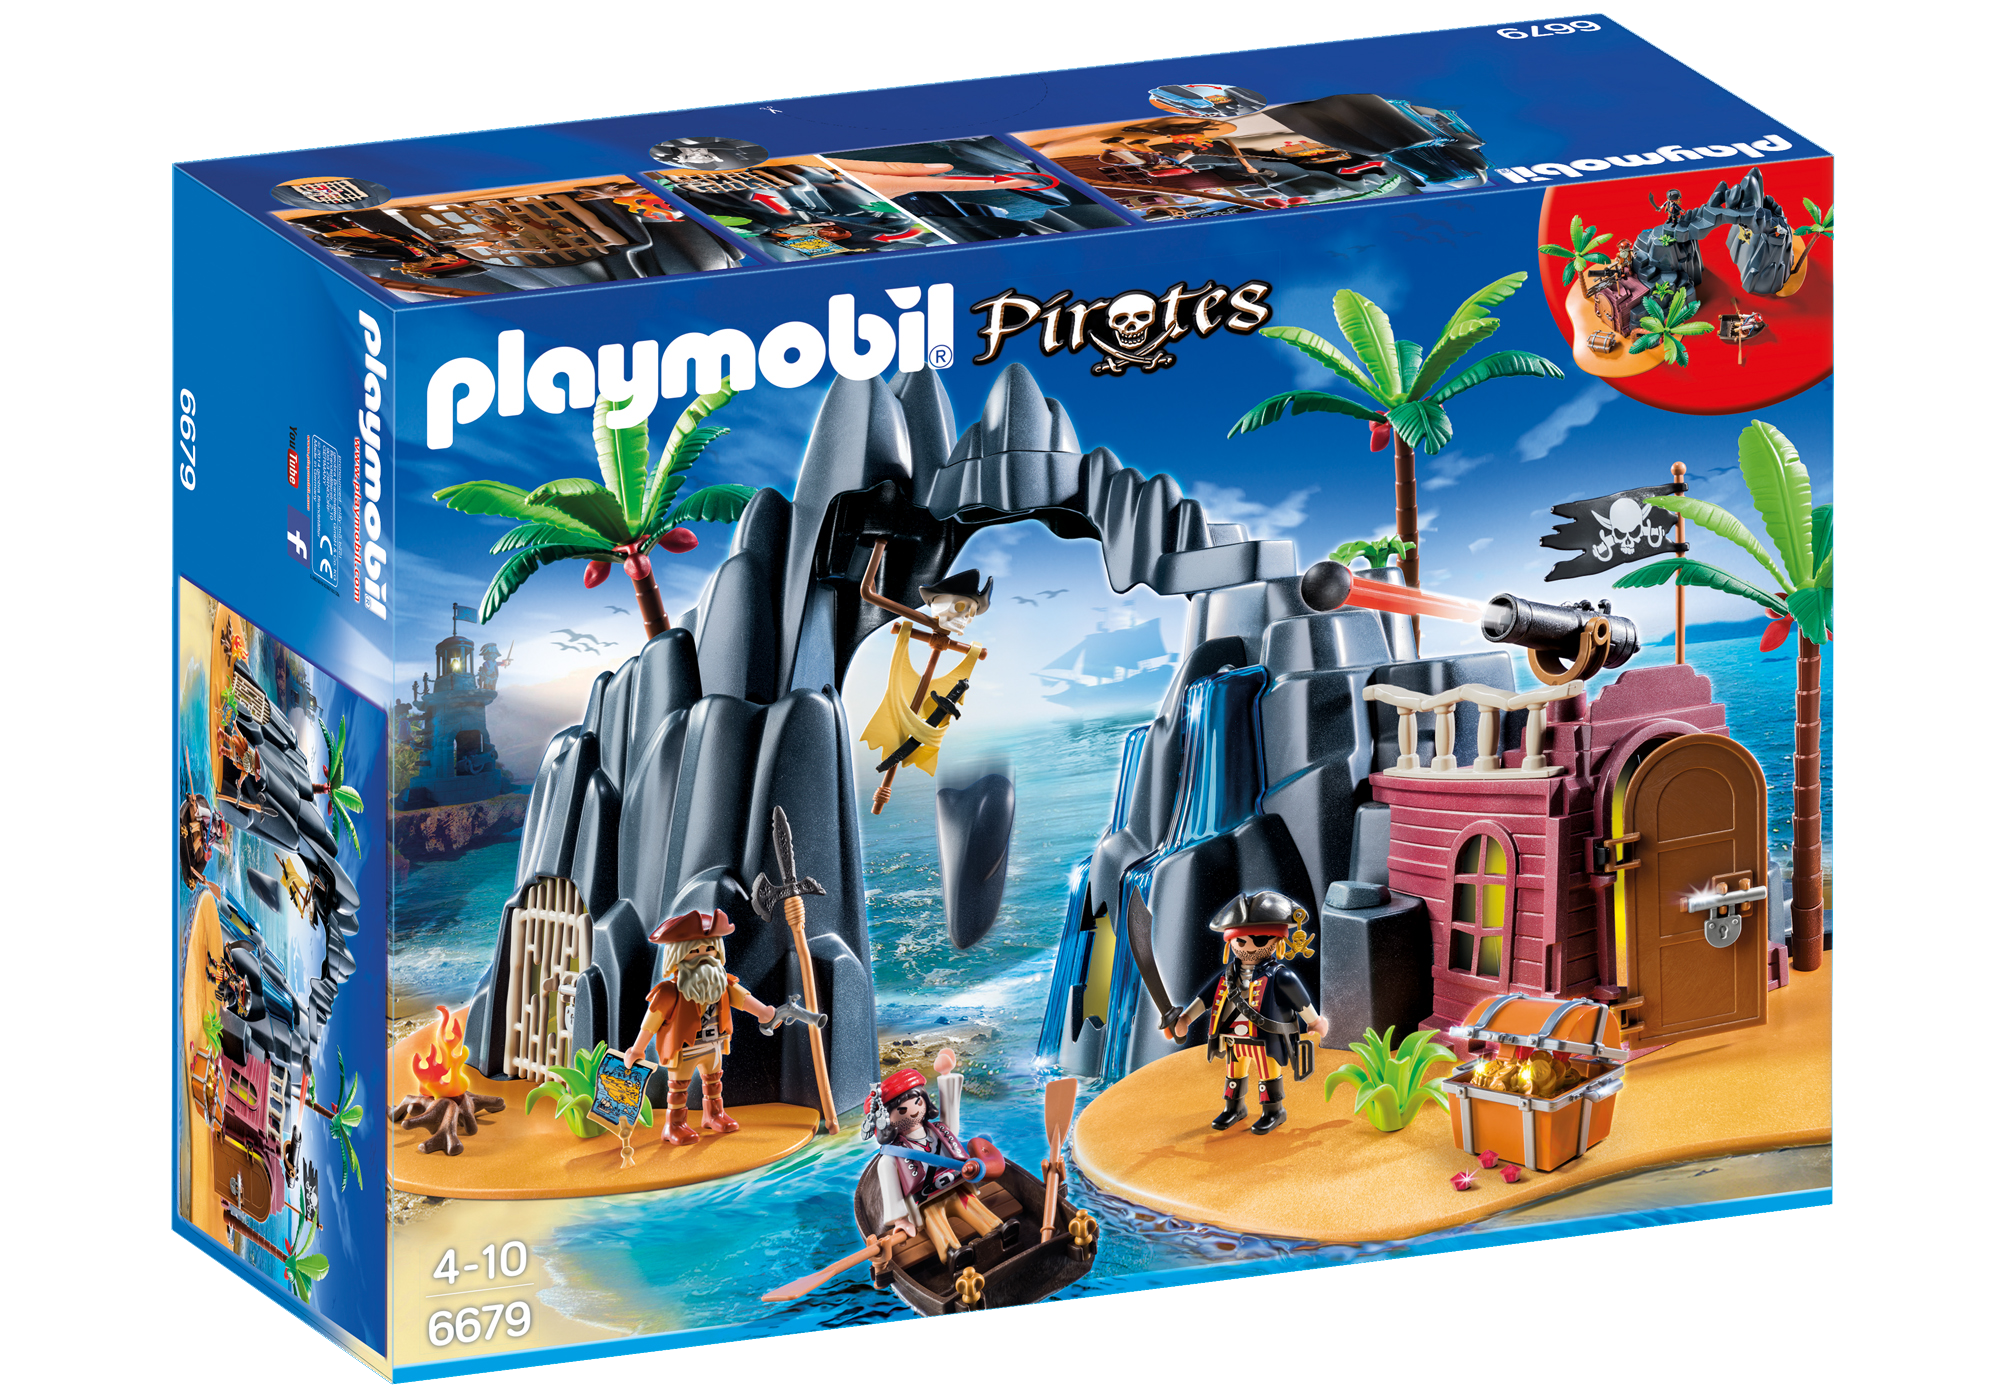 grotte pirate playmobil